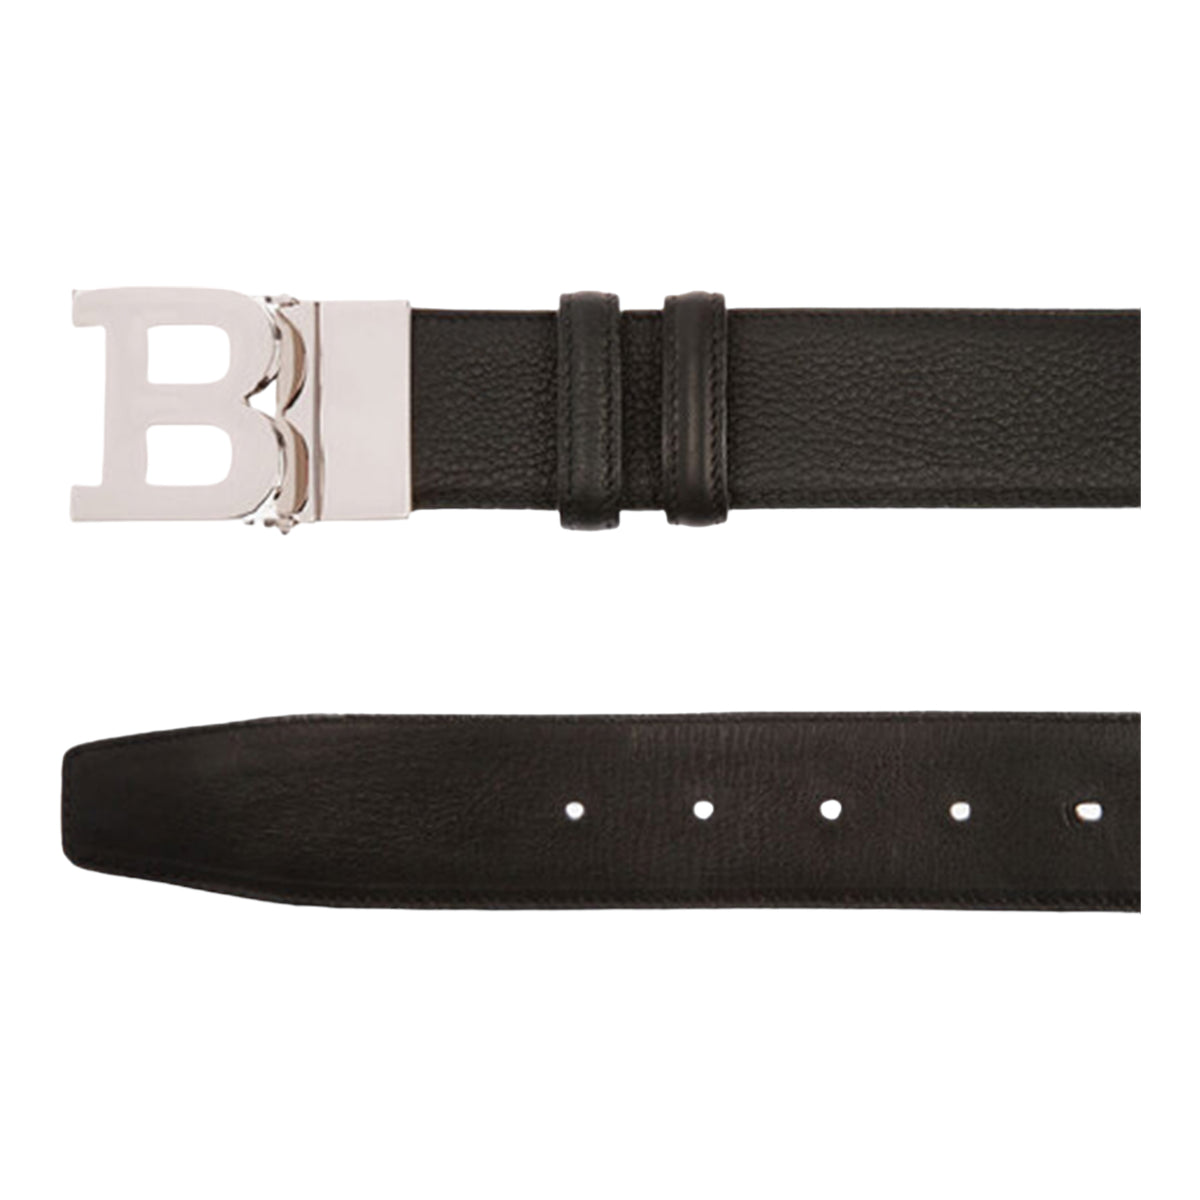 Bally Men's B Buckle Adjustable & Reversible Leather Belt